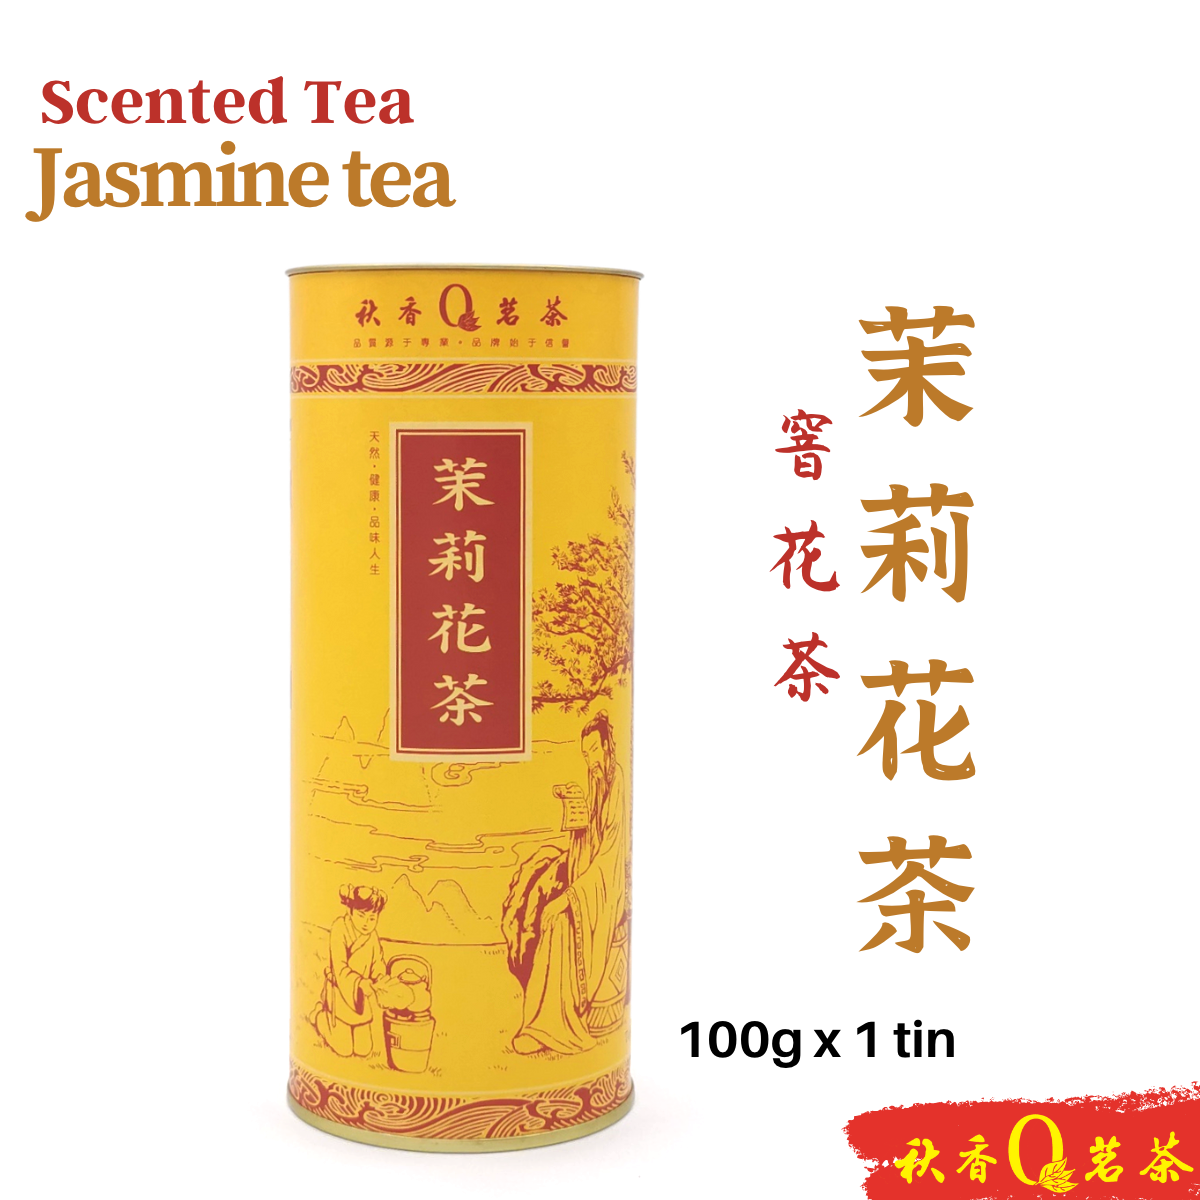 茉莉花茶 Jasmine Tea 【100g】 |【窨花茶 Scented tea】